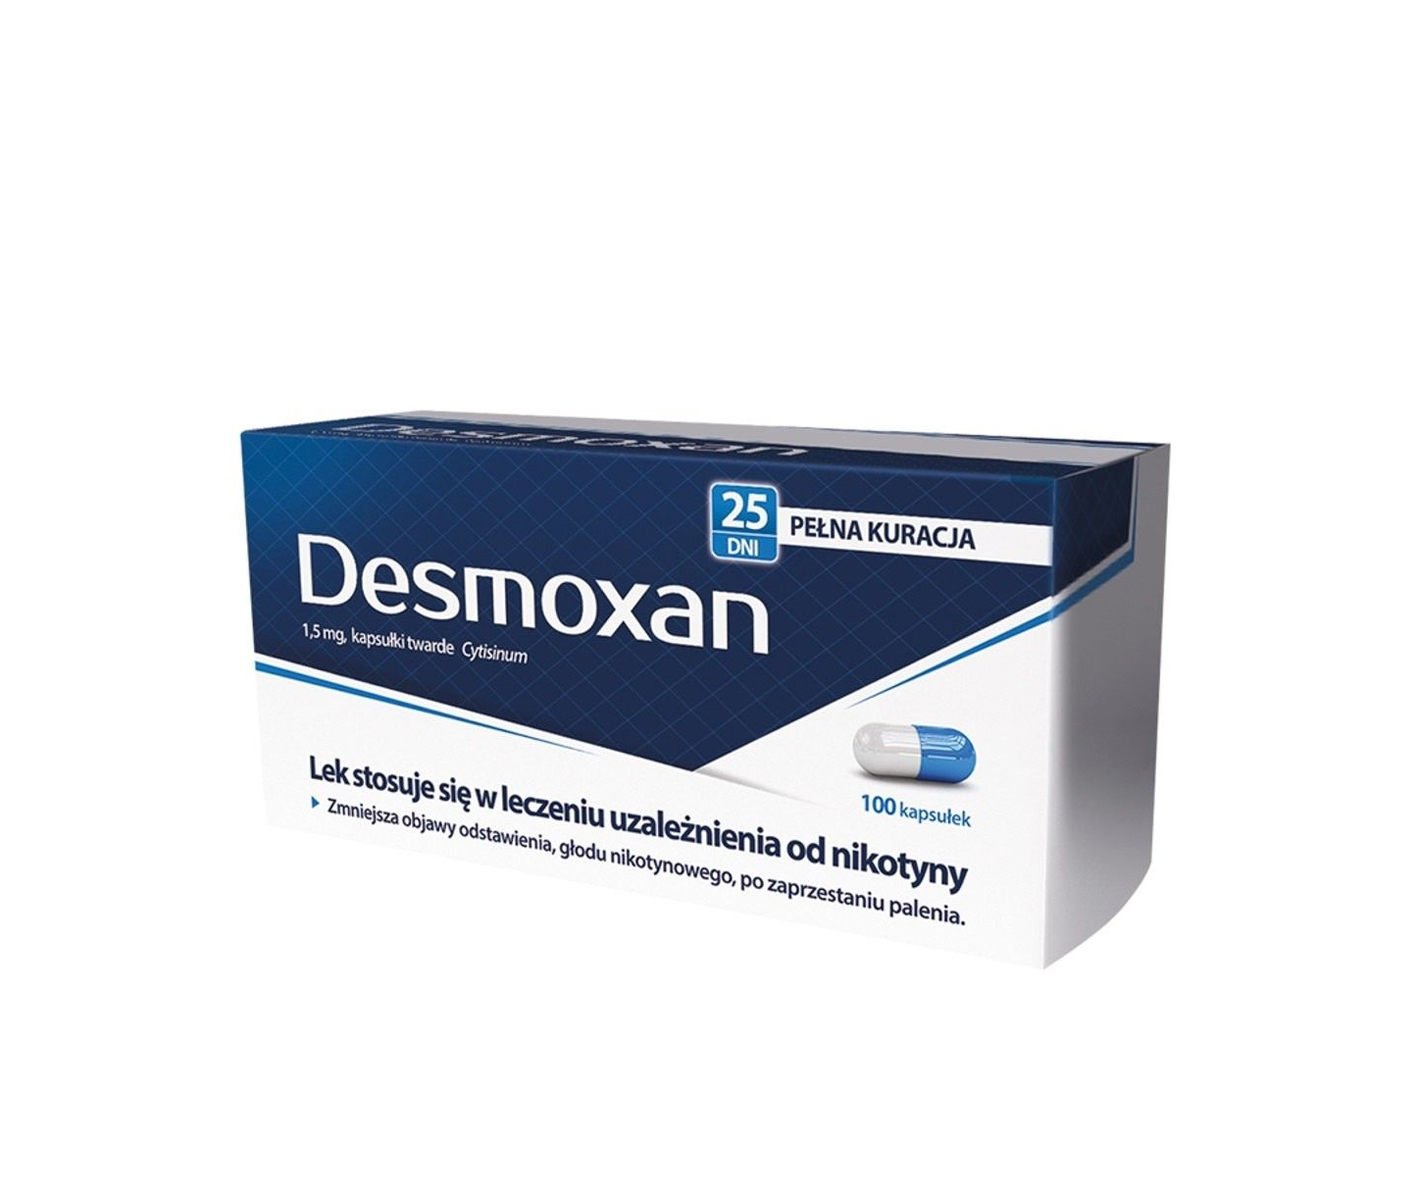 Desmoxan, smoking cessation capsules